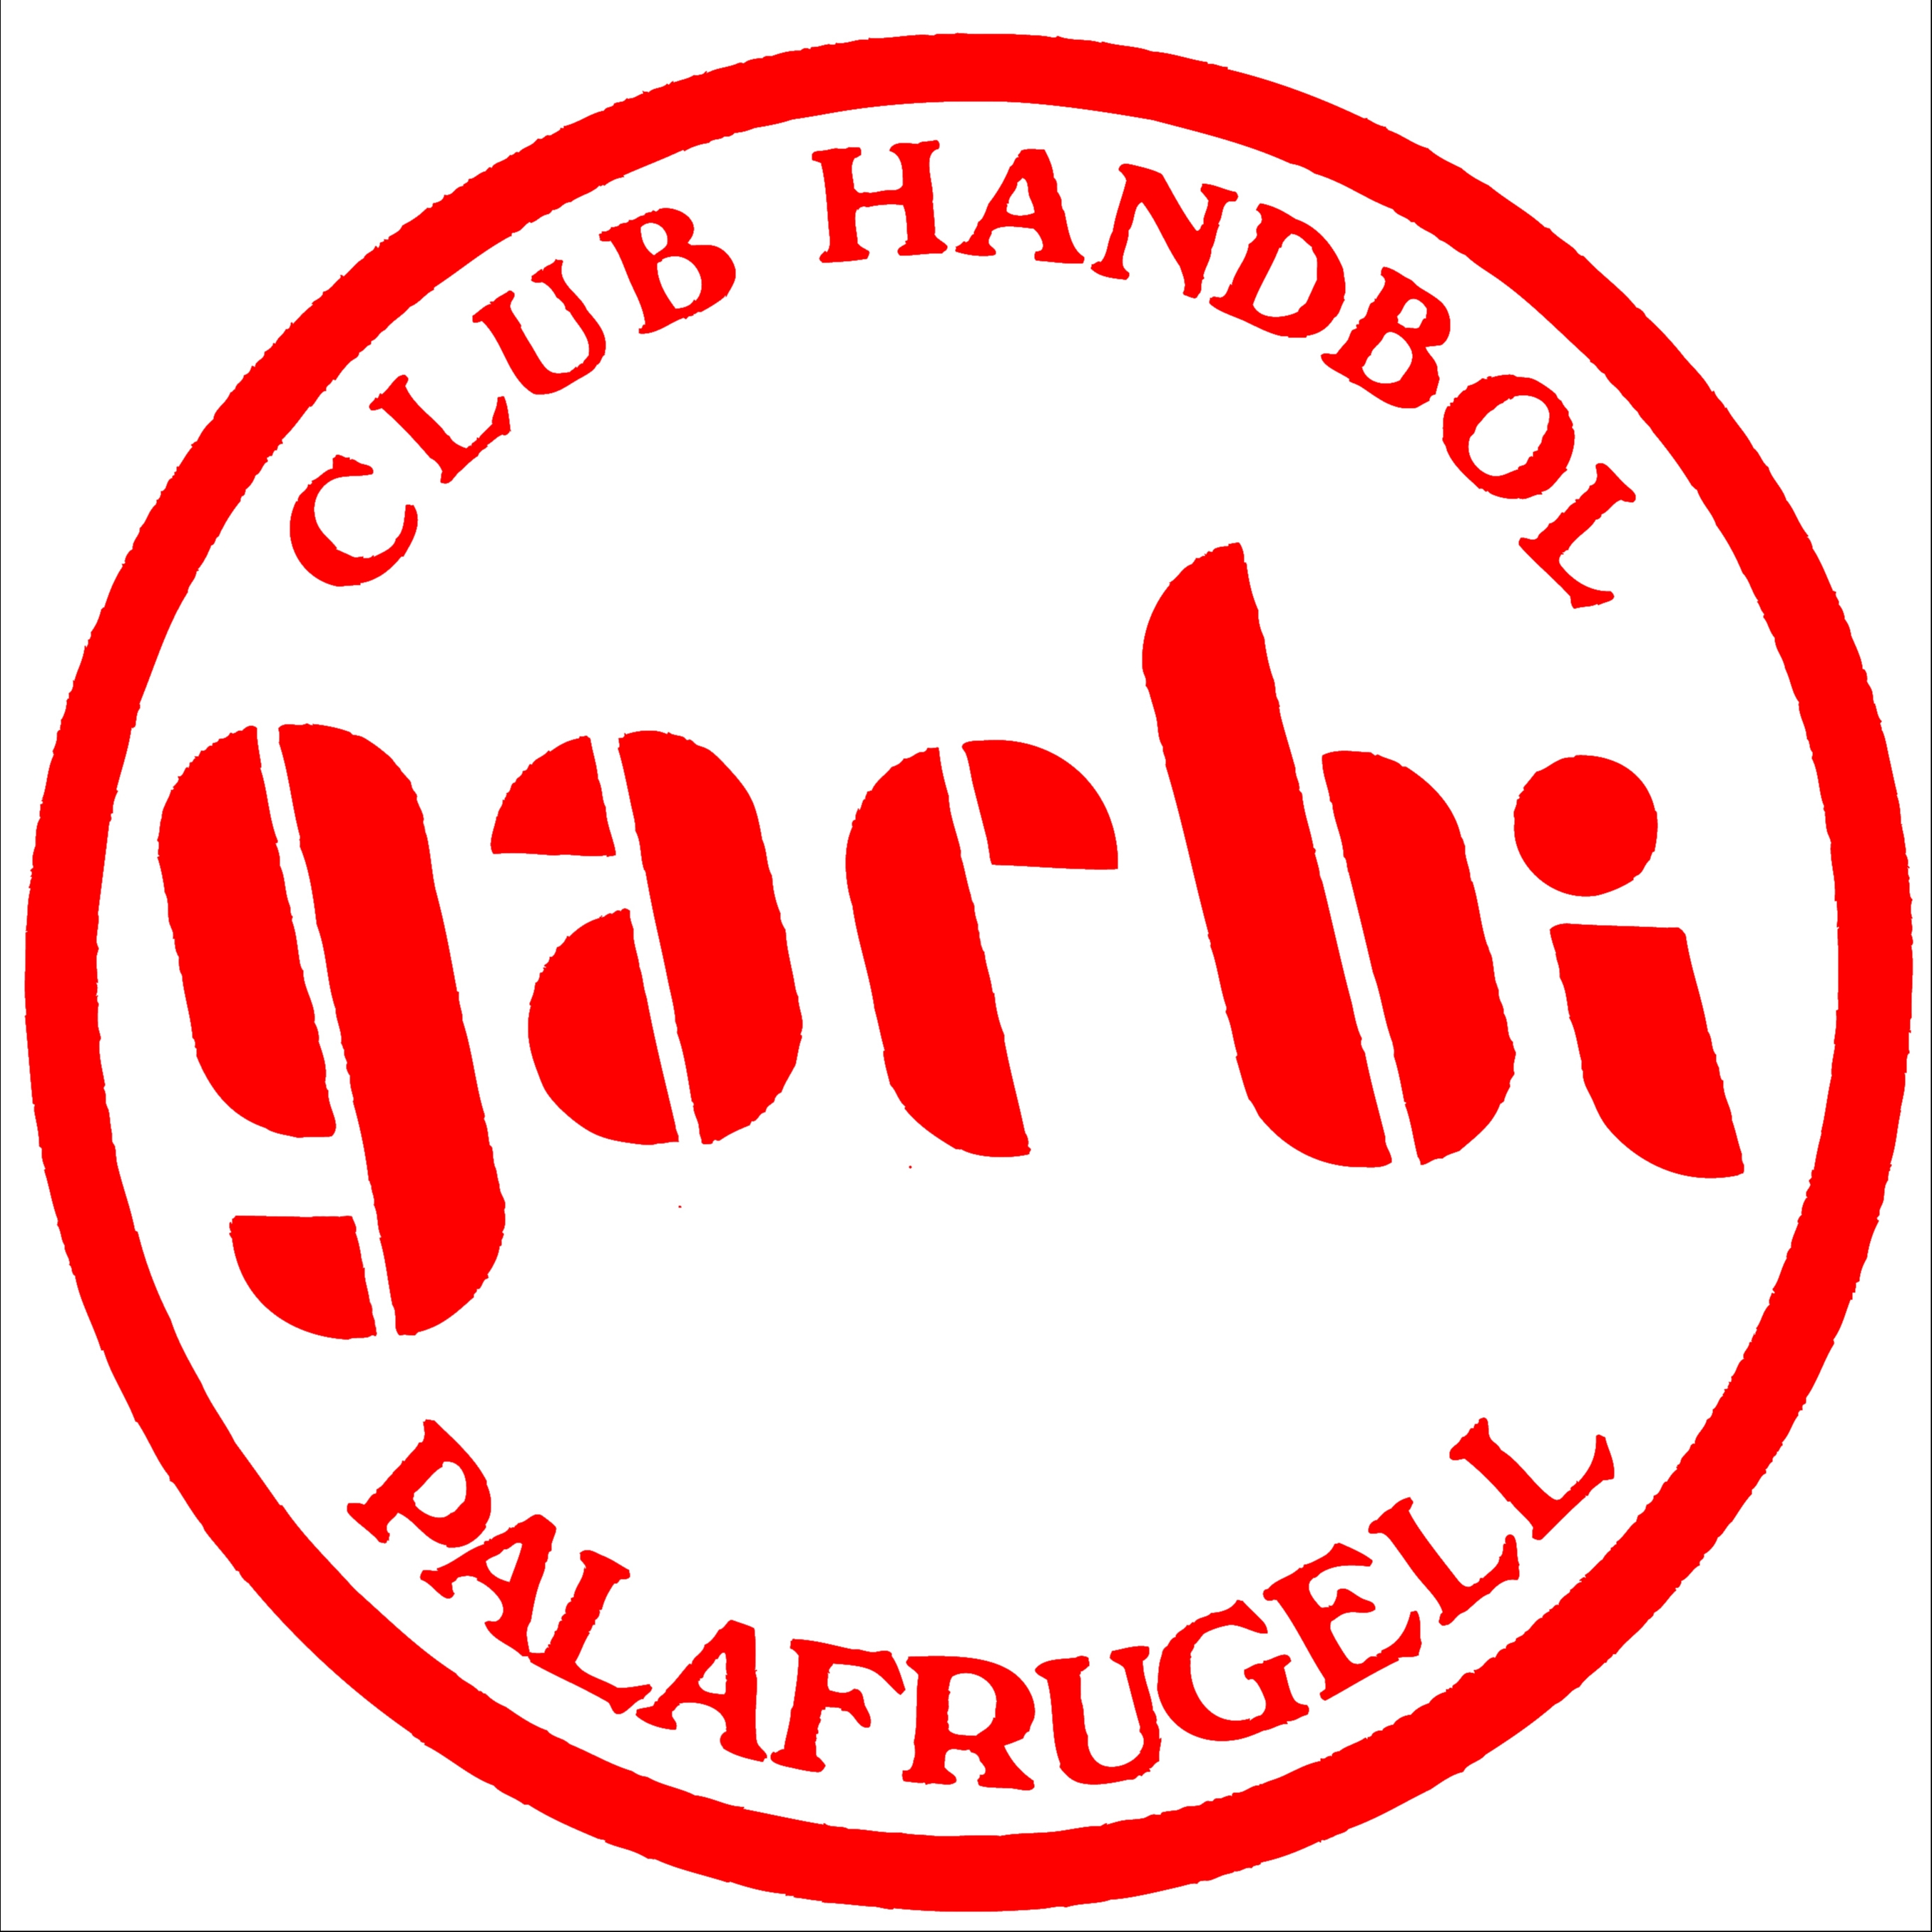 CLUB HANDBOL GARBI